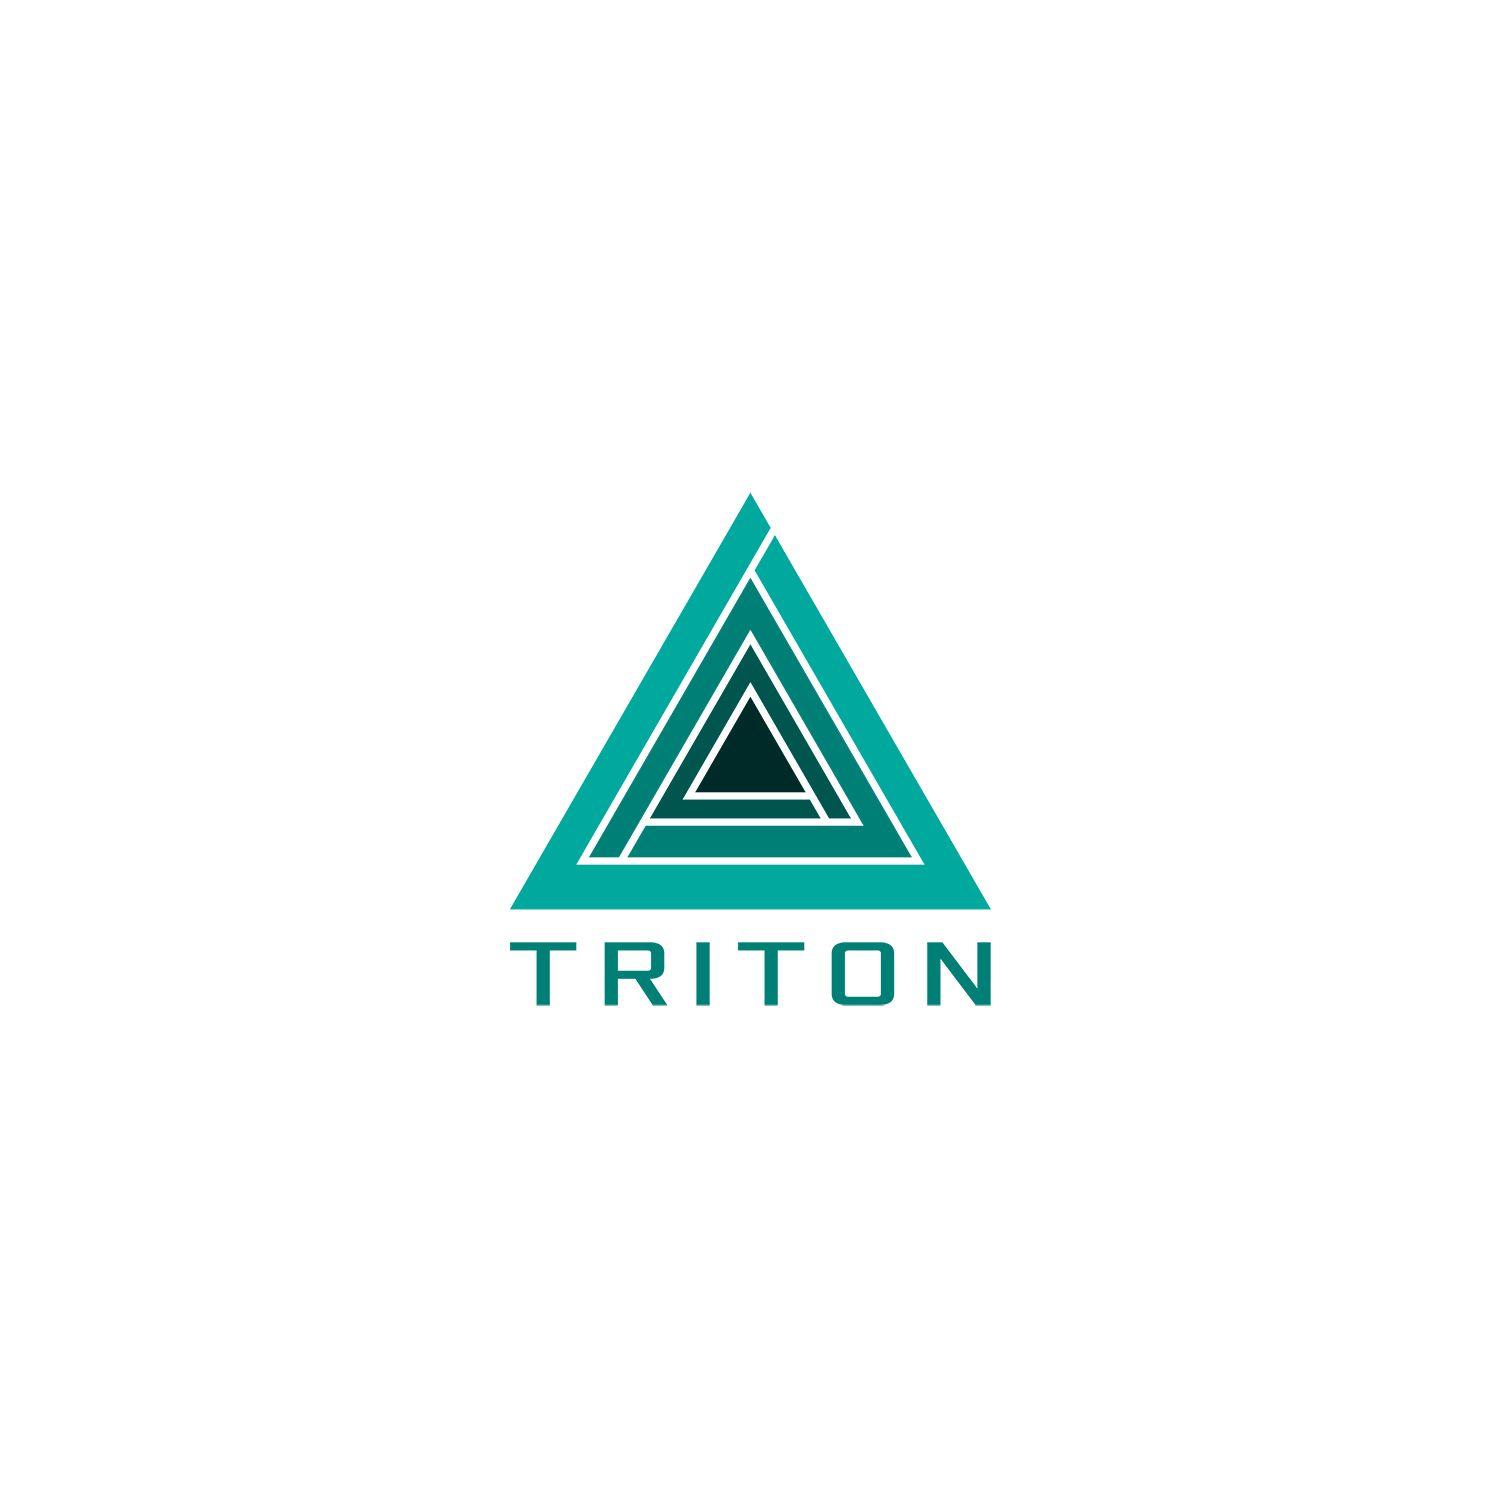 Triton Triangle Logo - Logo Design for Triton by bram_pj. Design